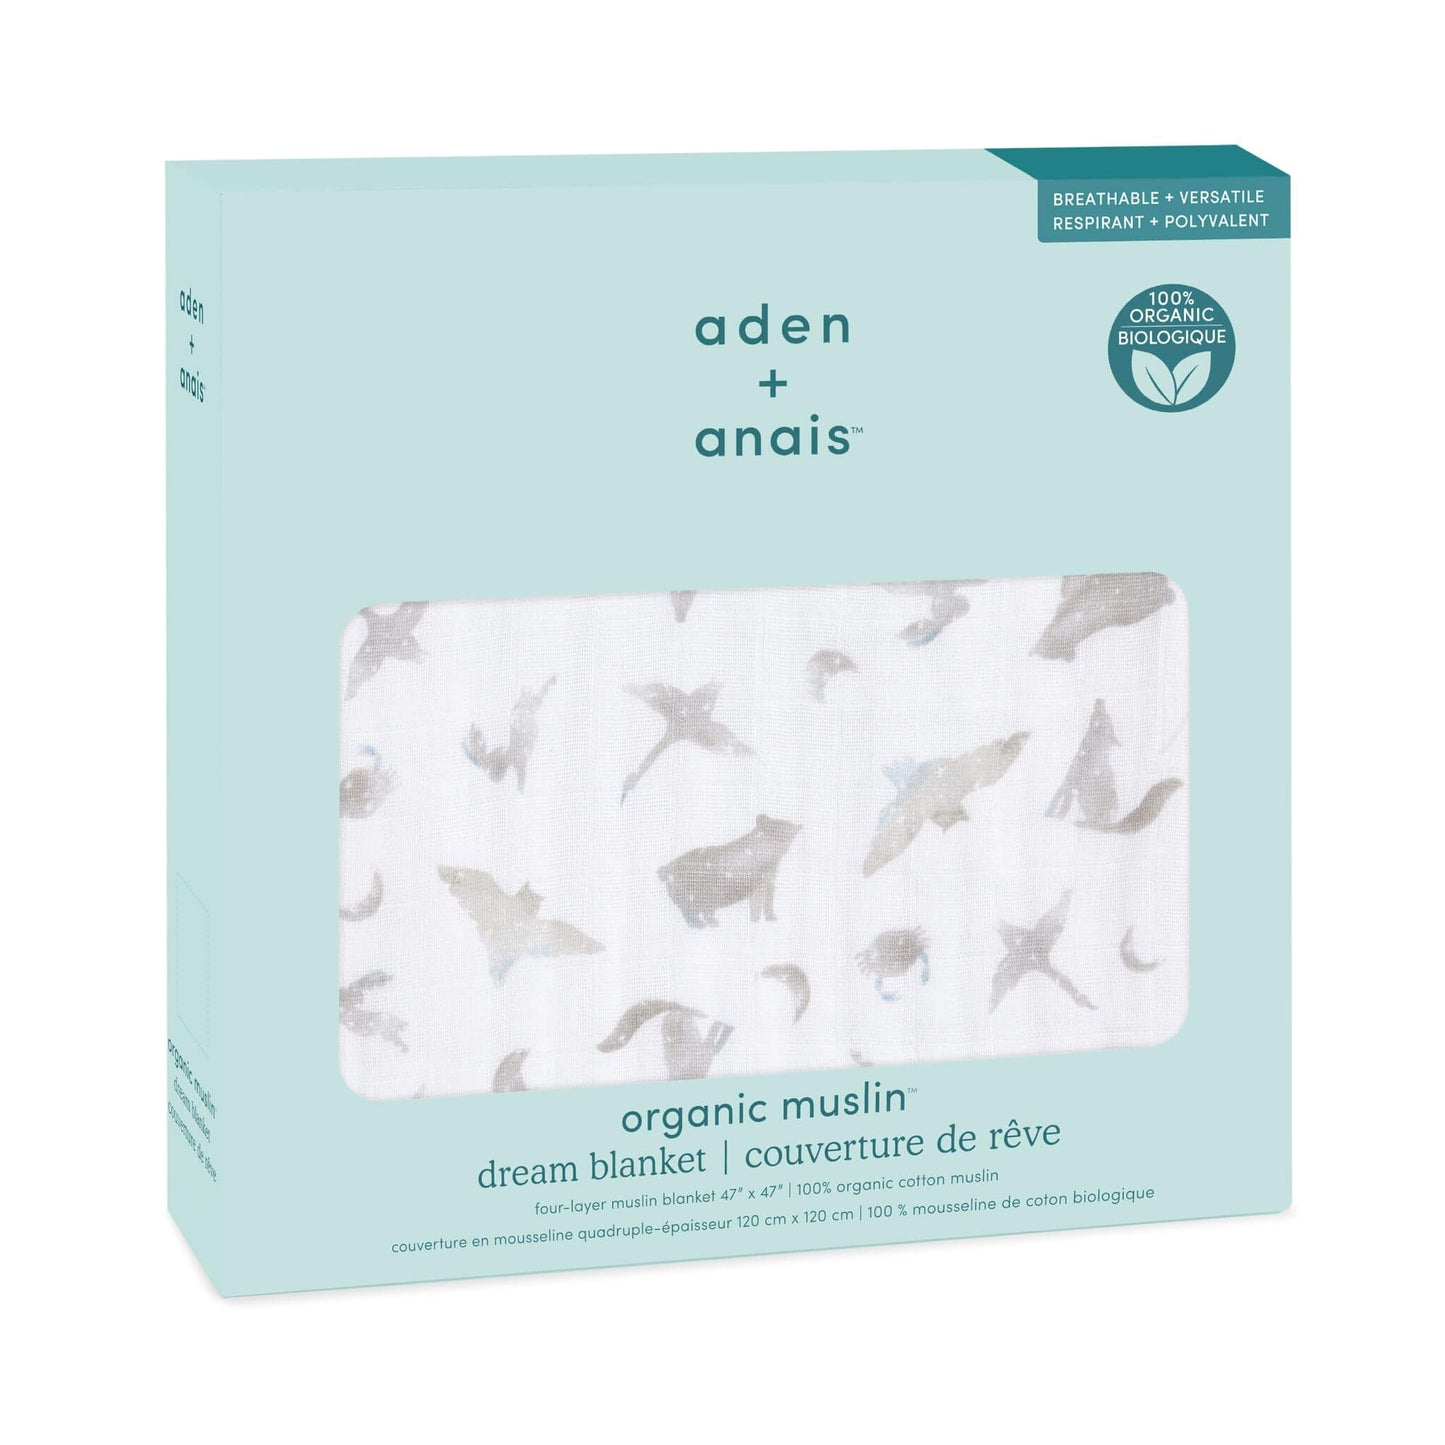 aden + anais Organic Dream Blanket (Map the Stars)